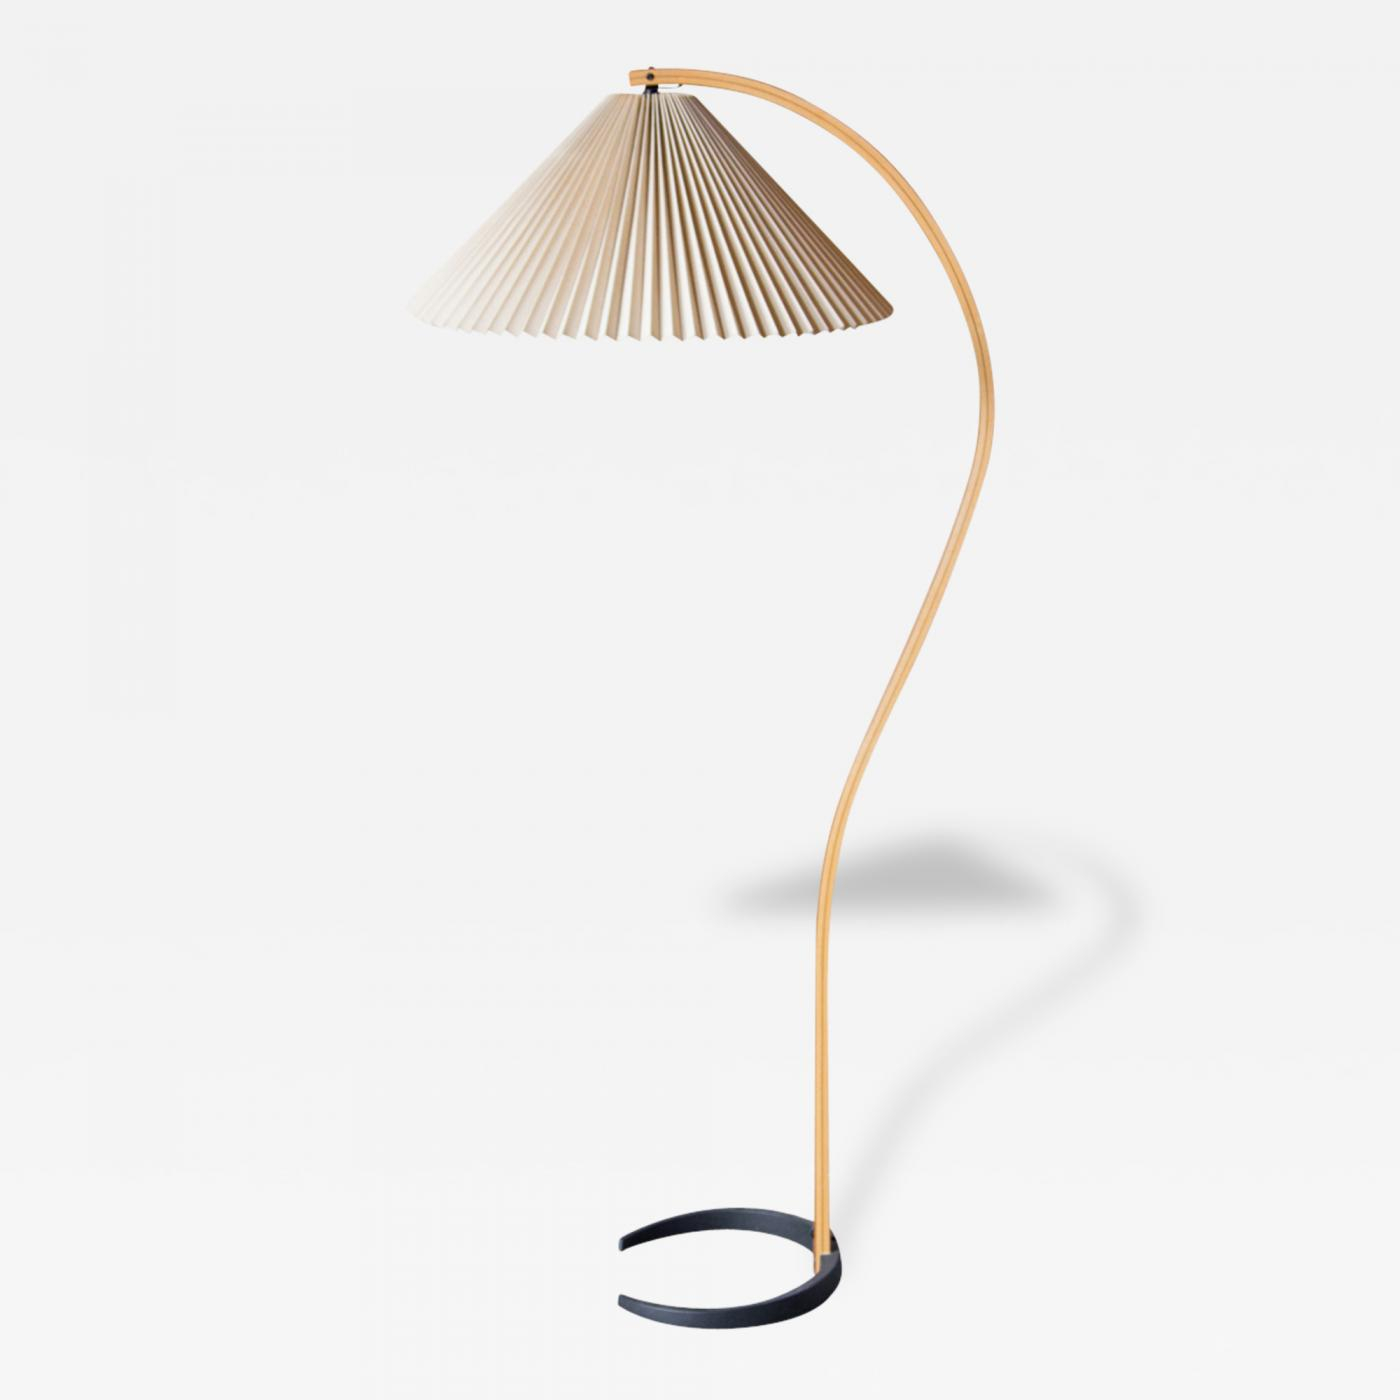 Caprani Light As Caprani Light Ls Bentwood Floor Lamp within dimensions 1400 X 1400